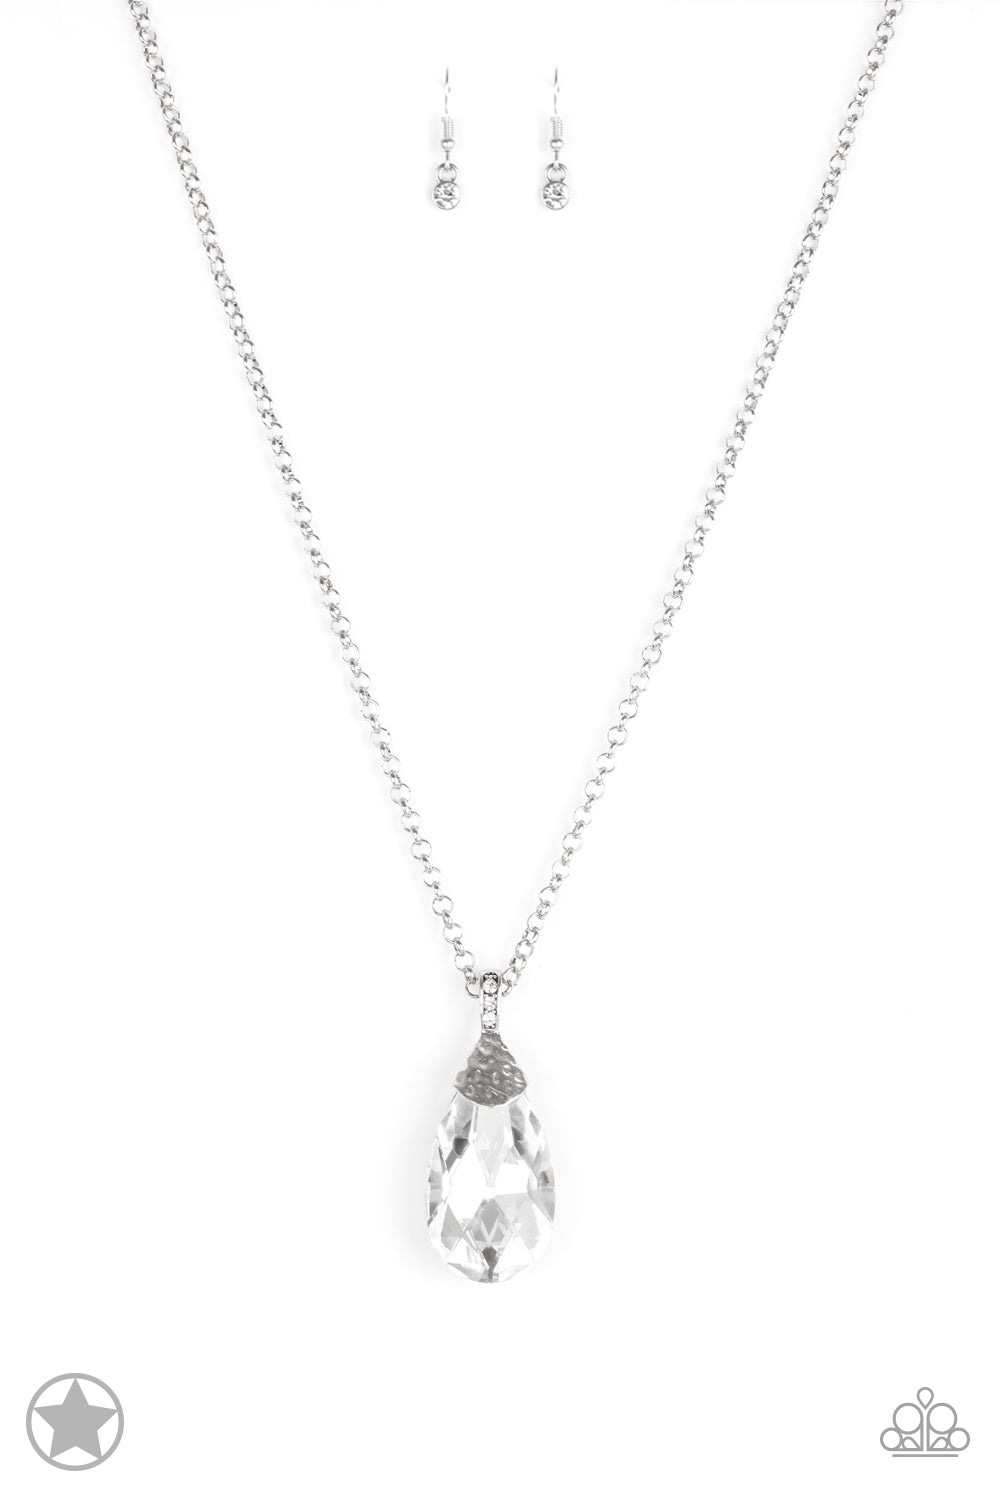 Spellbinding Sparkle-White Necklace